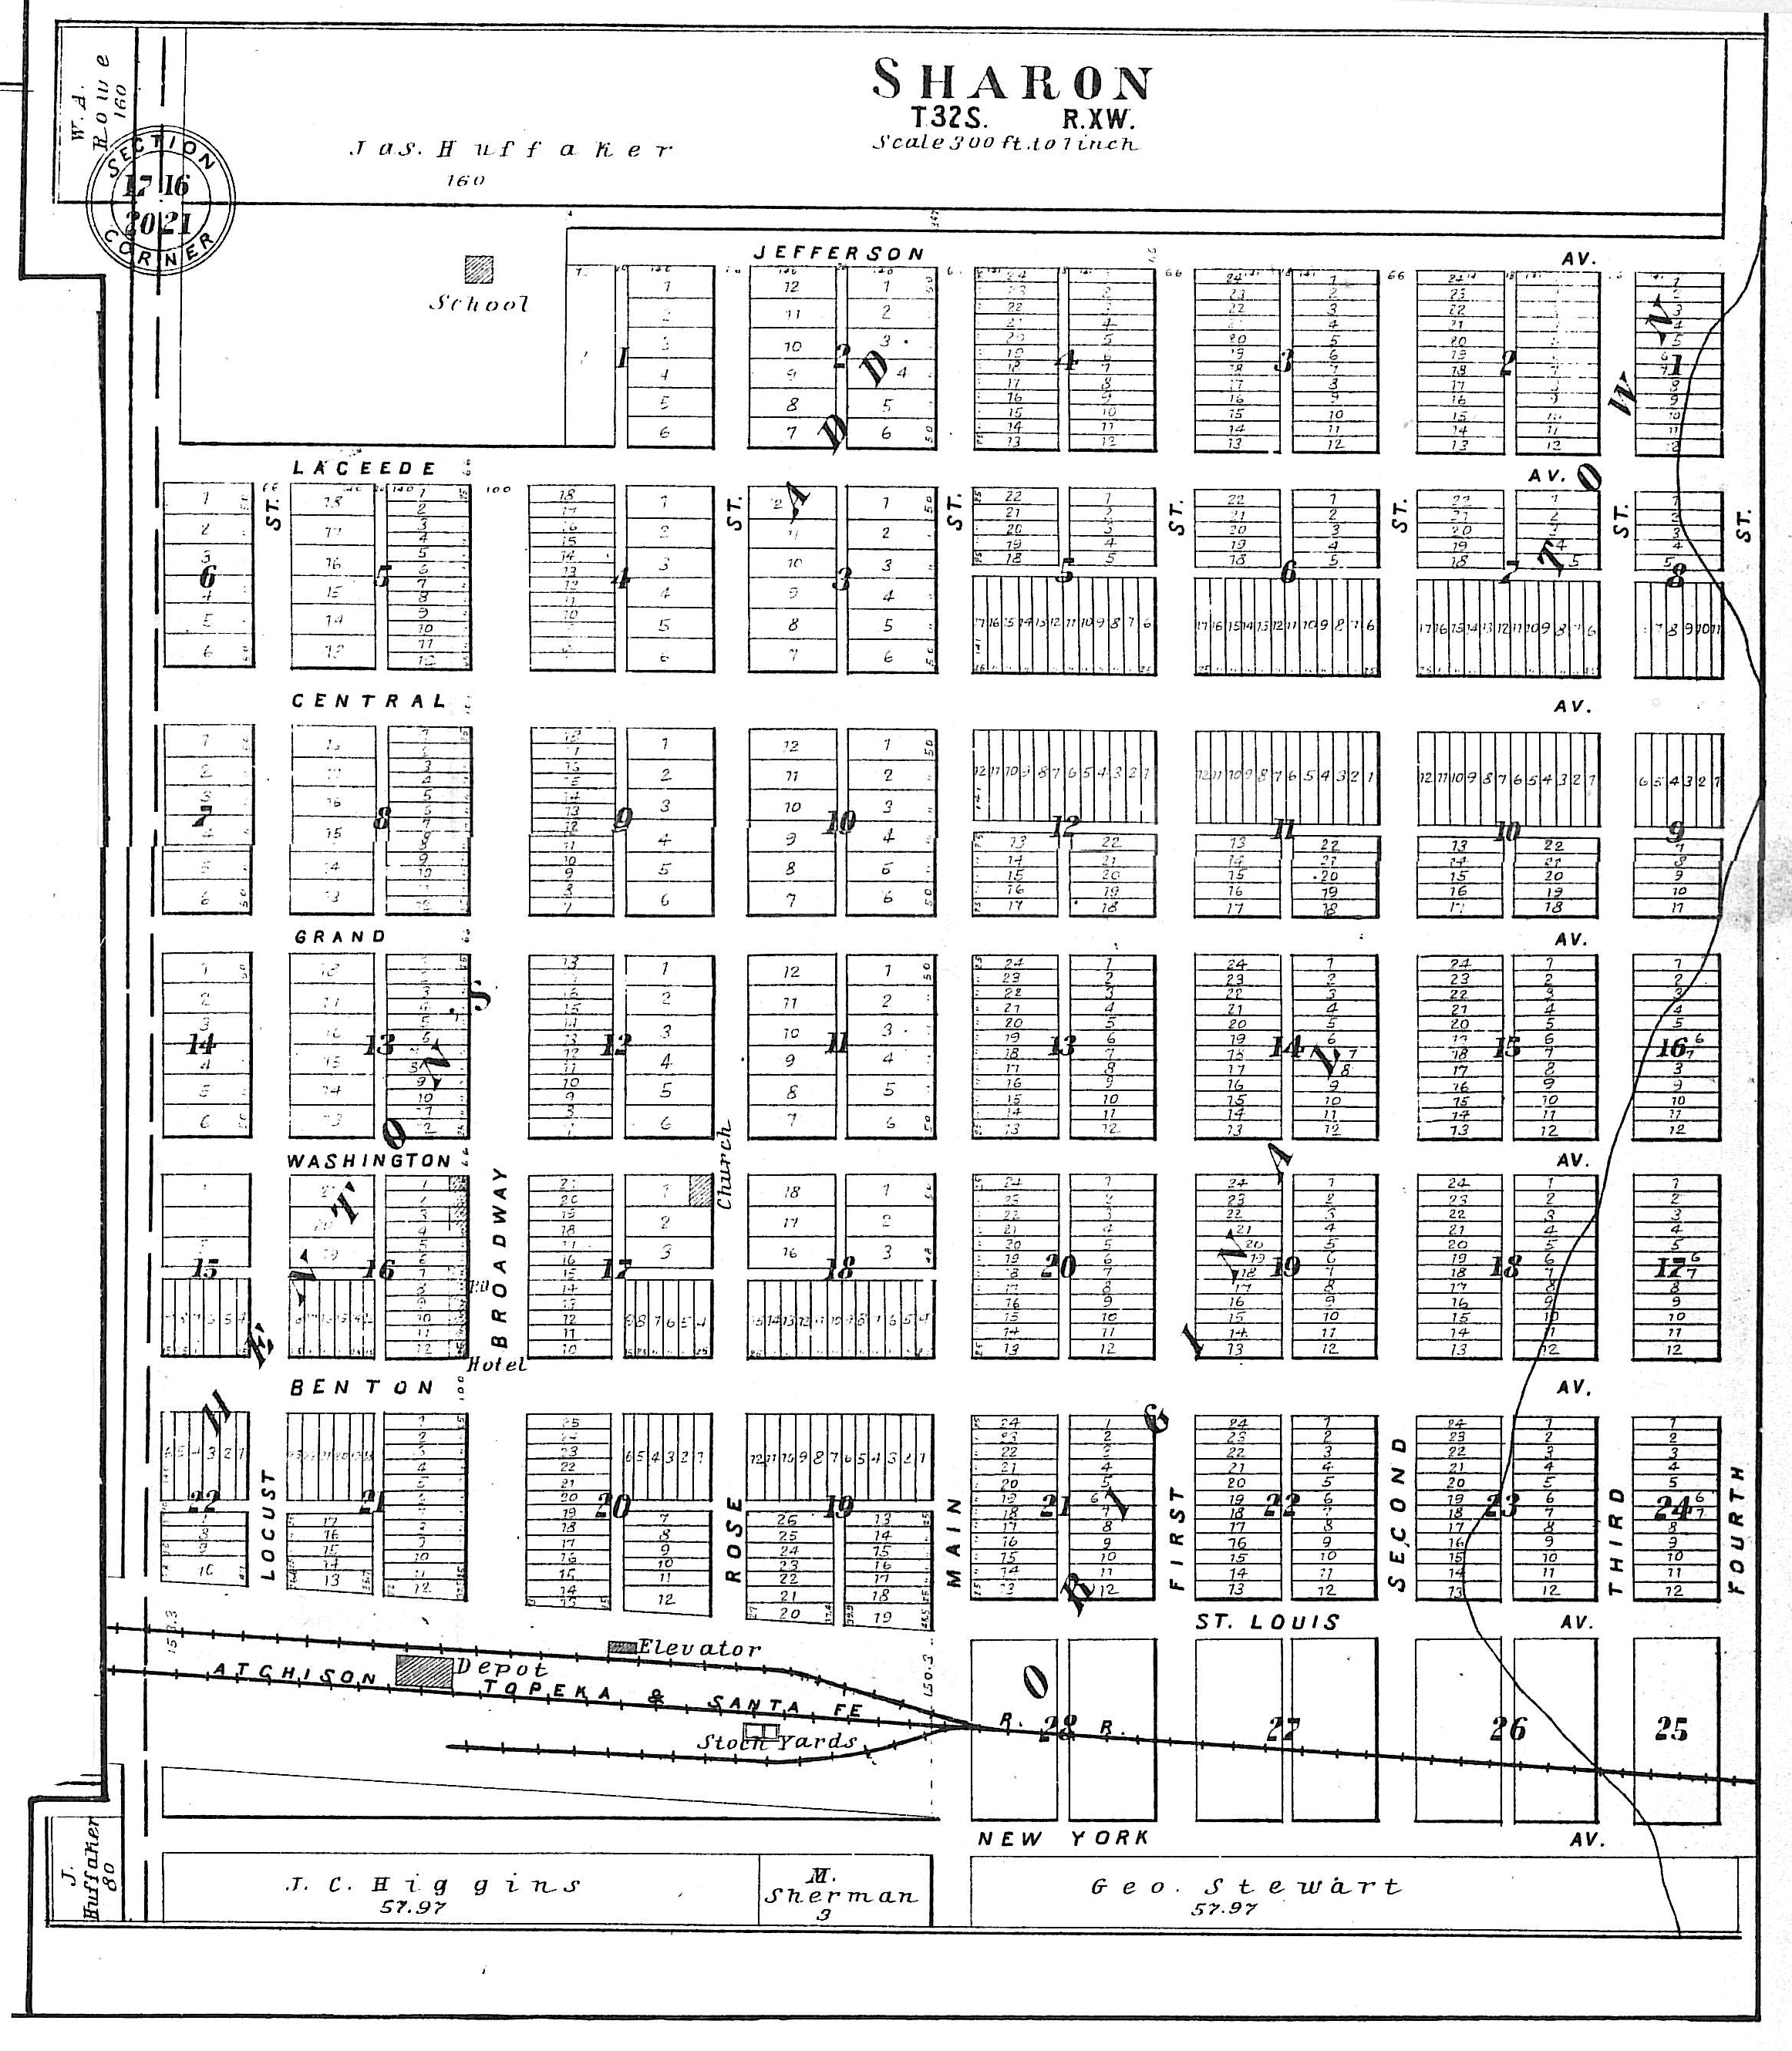 Plot Map of Sharon, Barber County, Kansas. 

From the 'Standard Atlas of Barber County Kansas', 1905.

Map courtesy of Kimberly (Hoagland) Fowles.